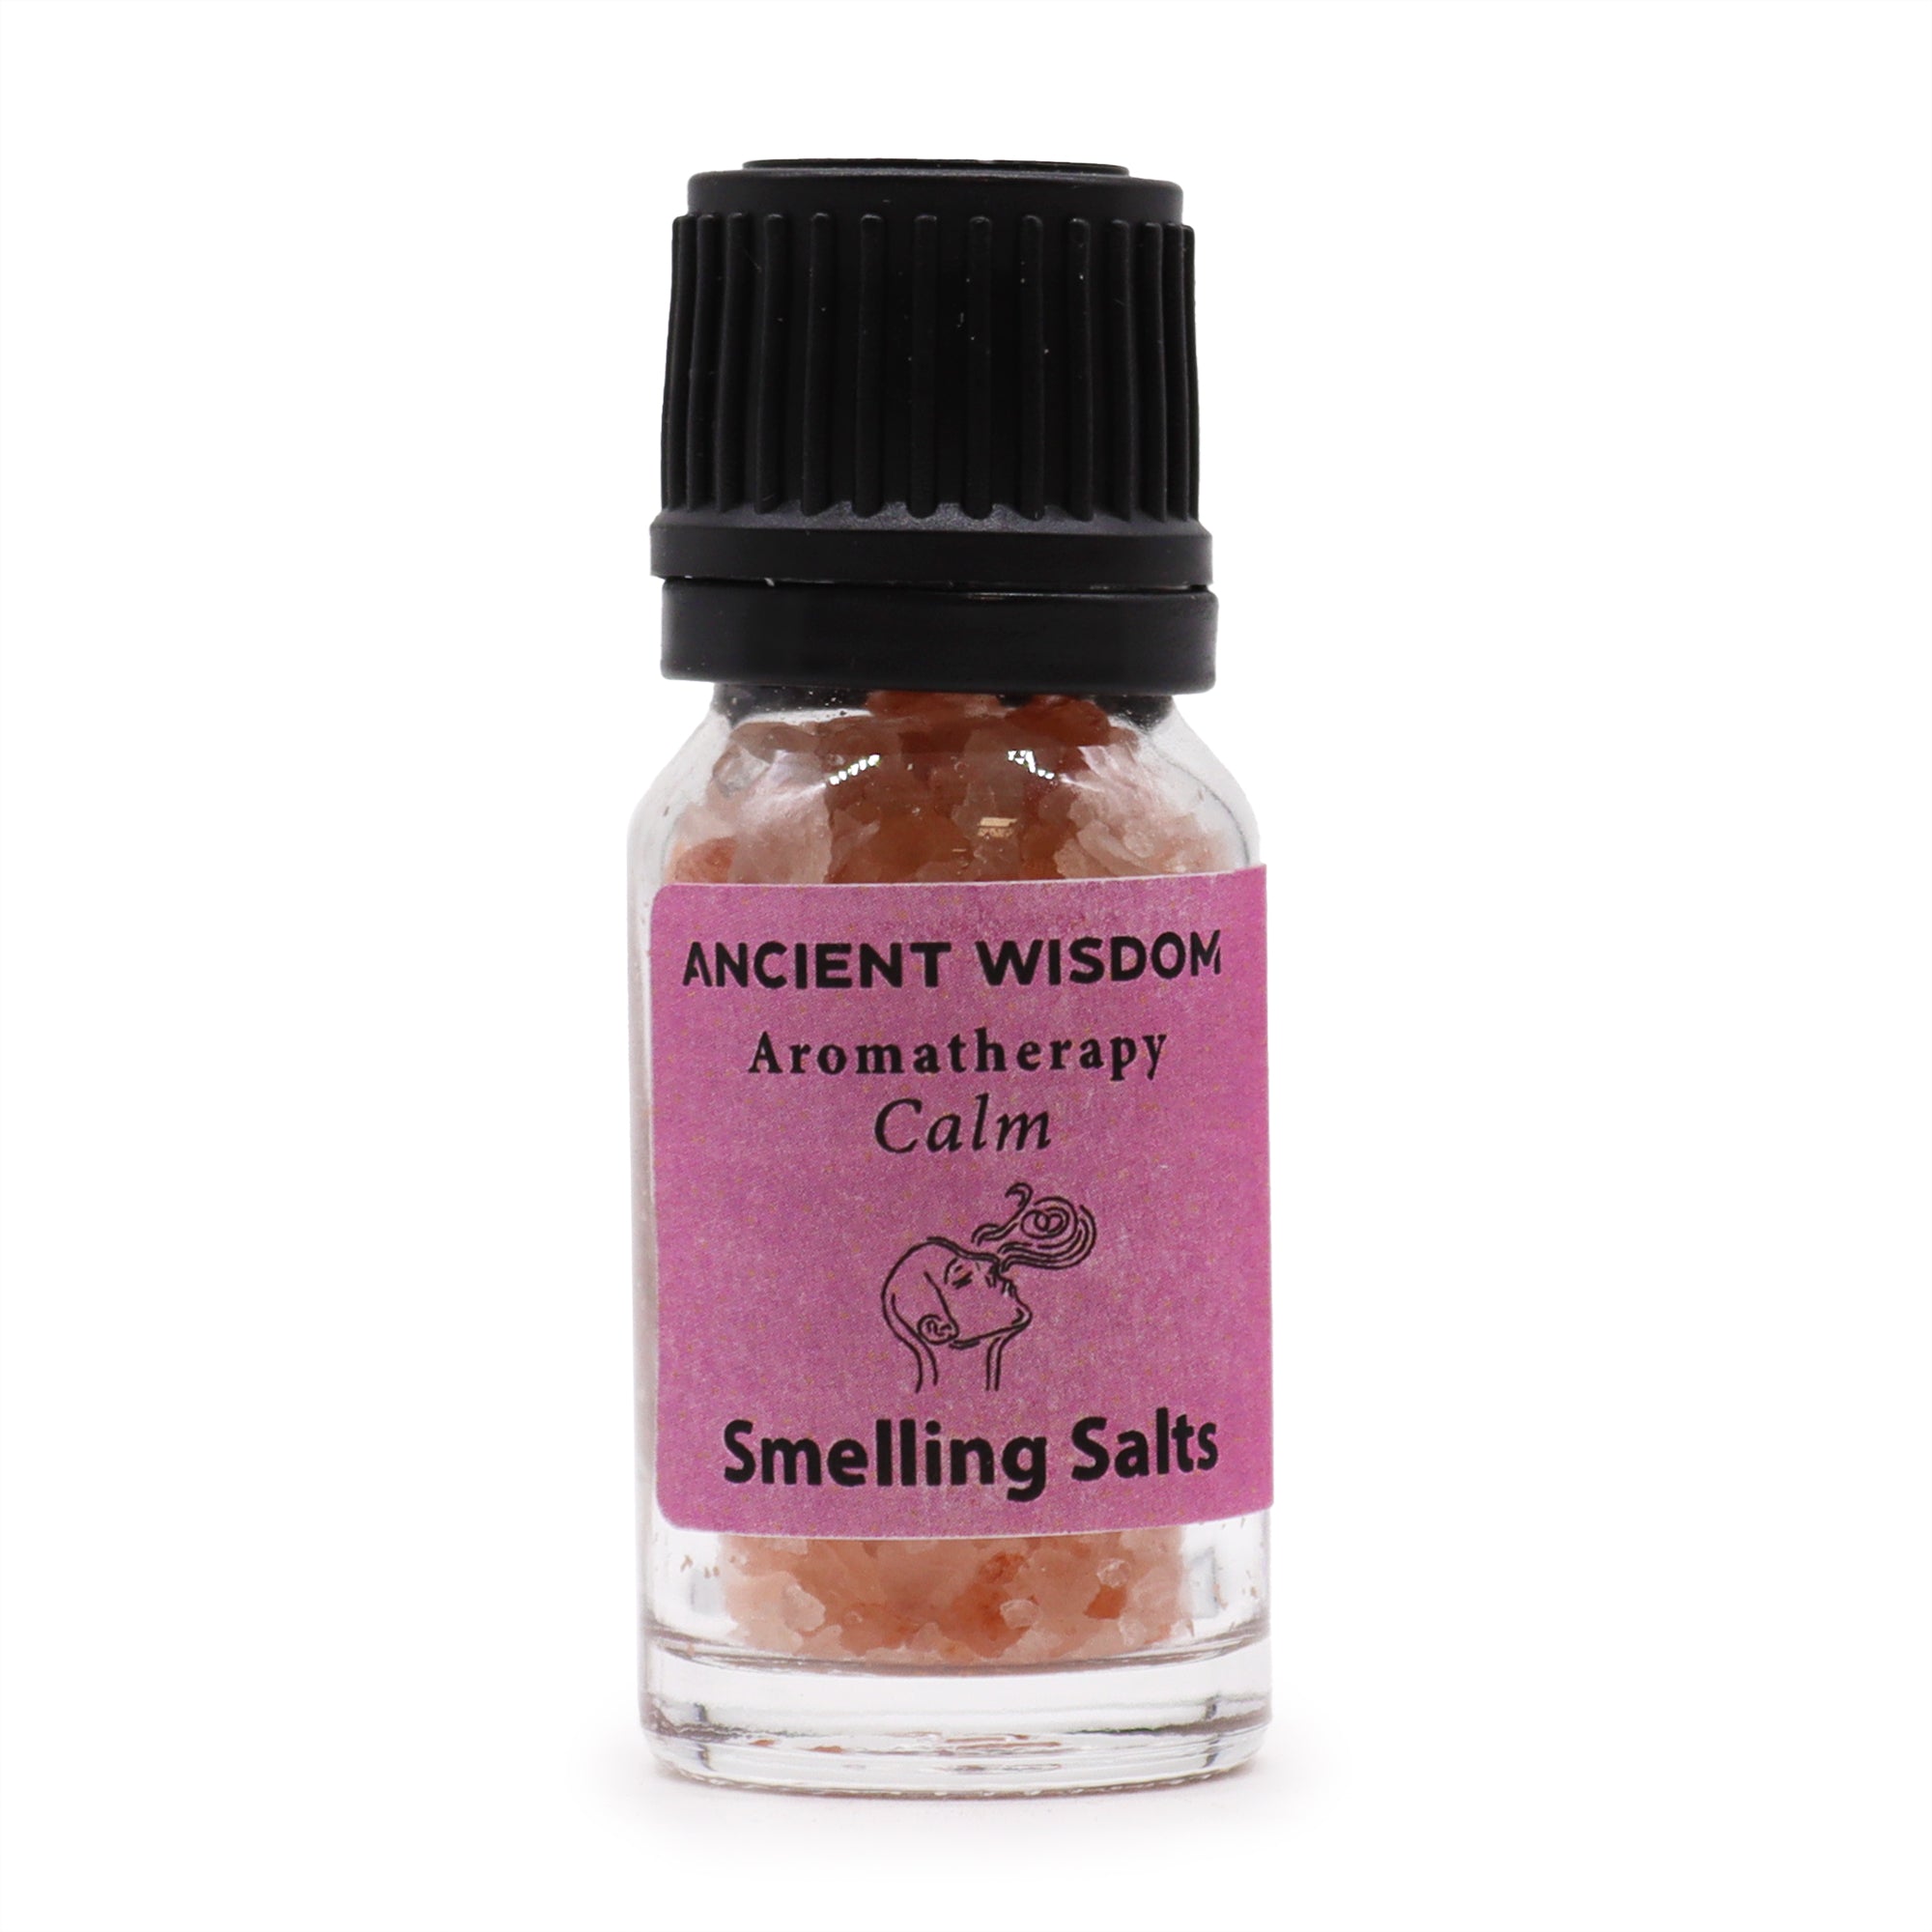 View Calm Aromatherapy Smelling Salt information